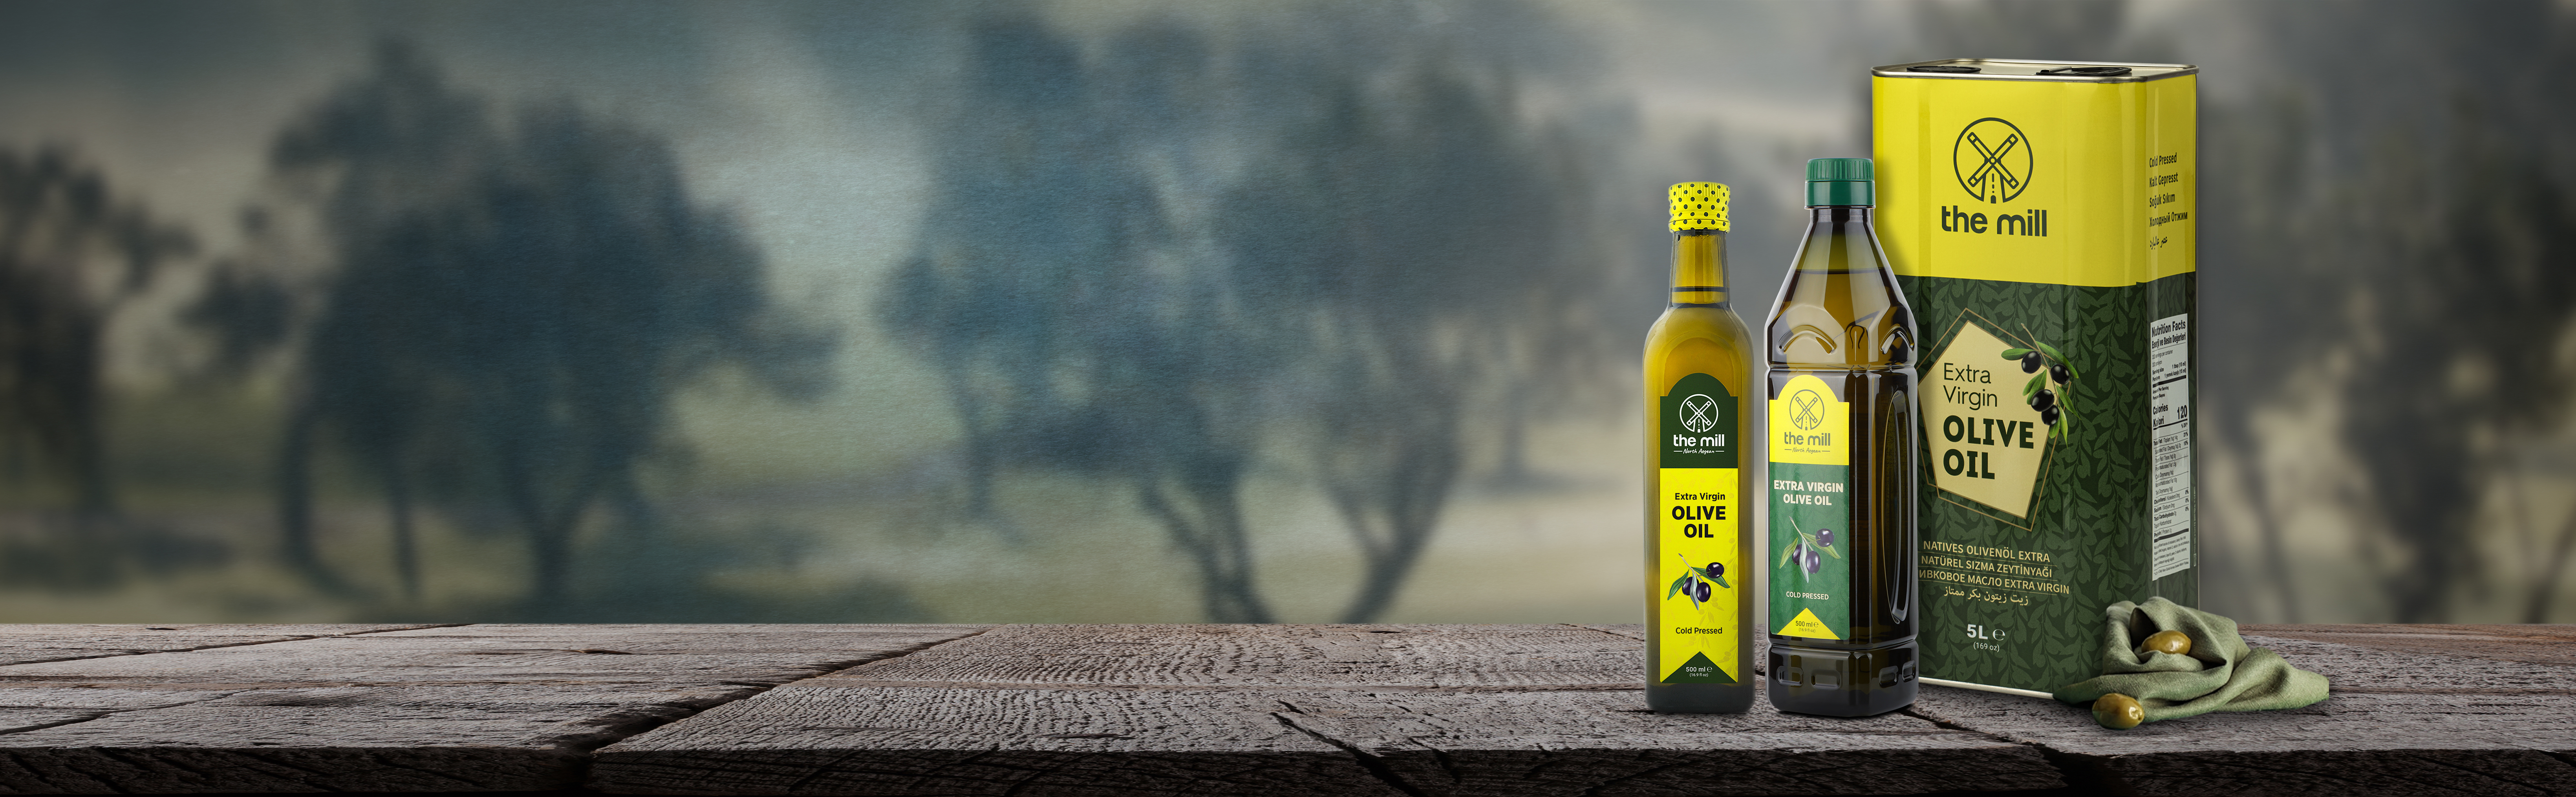 The Mill Extra Virgin Olive Oil Banner.jpg (6.69 MB)